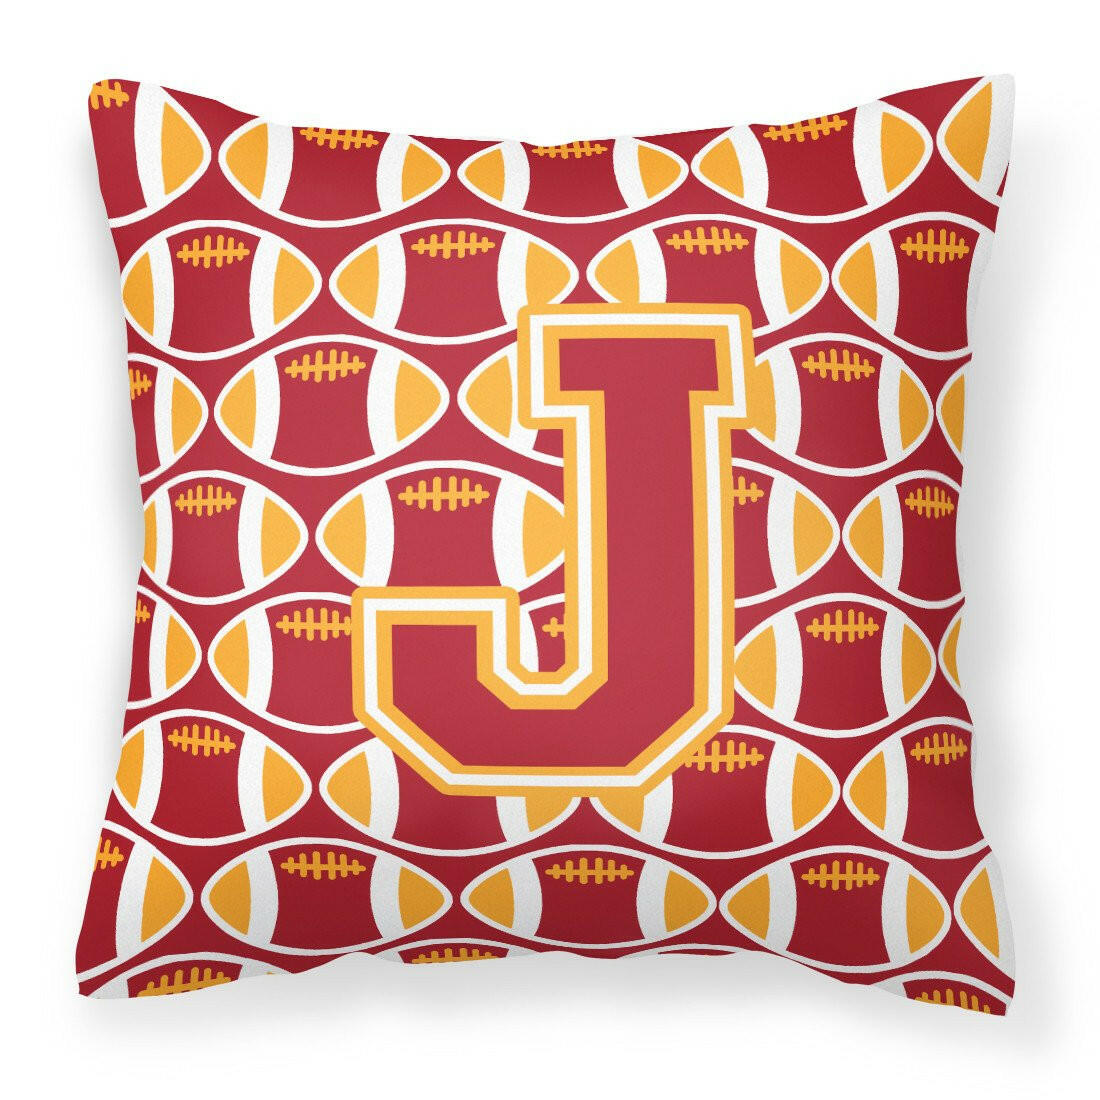 Letter J Football Cardinal and Gold Fabric Decorative Pillow CJ1070-JPW1414 by Caroline's Treasures